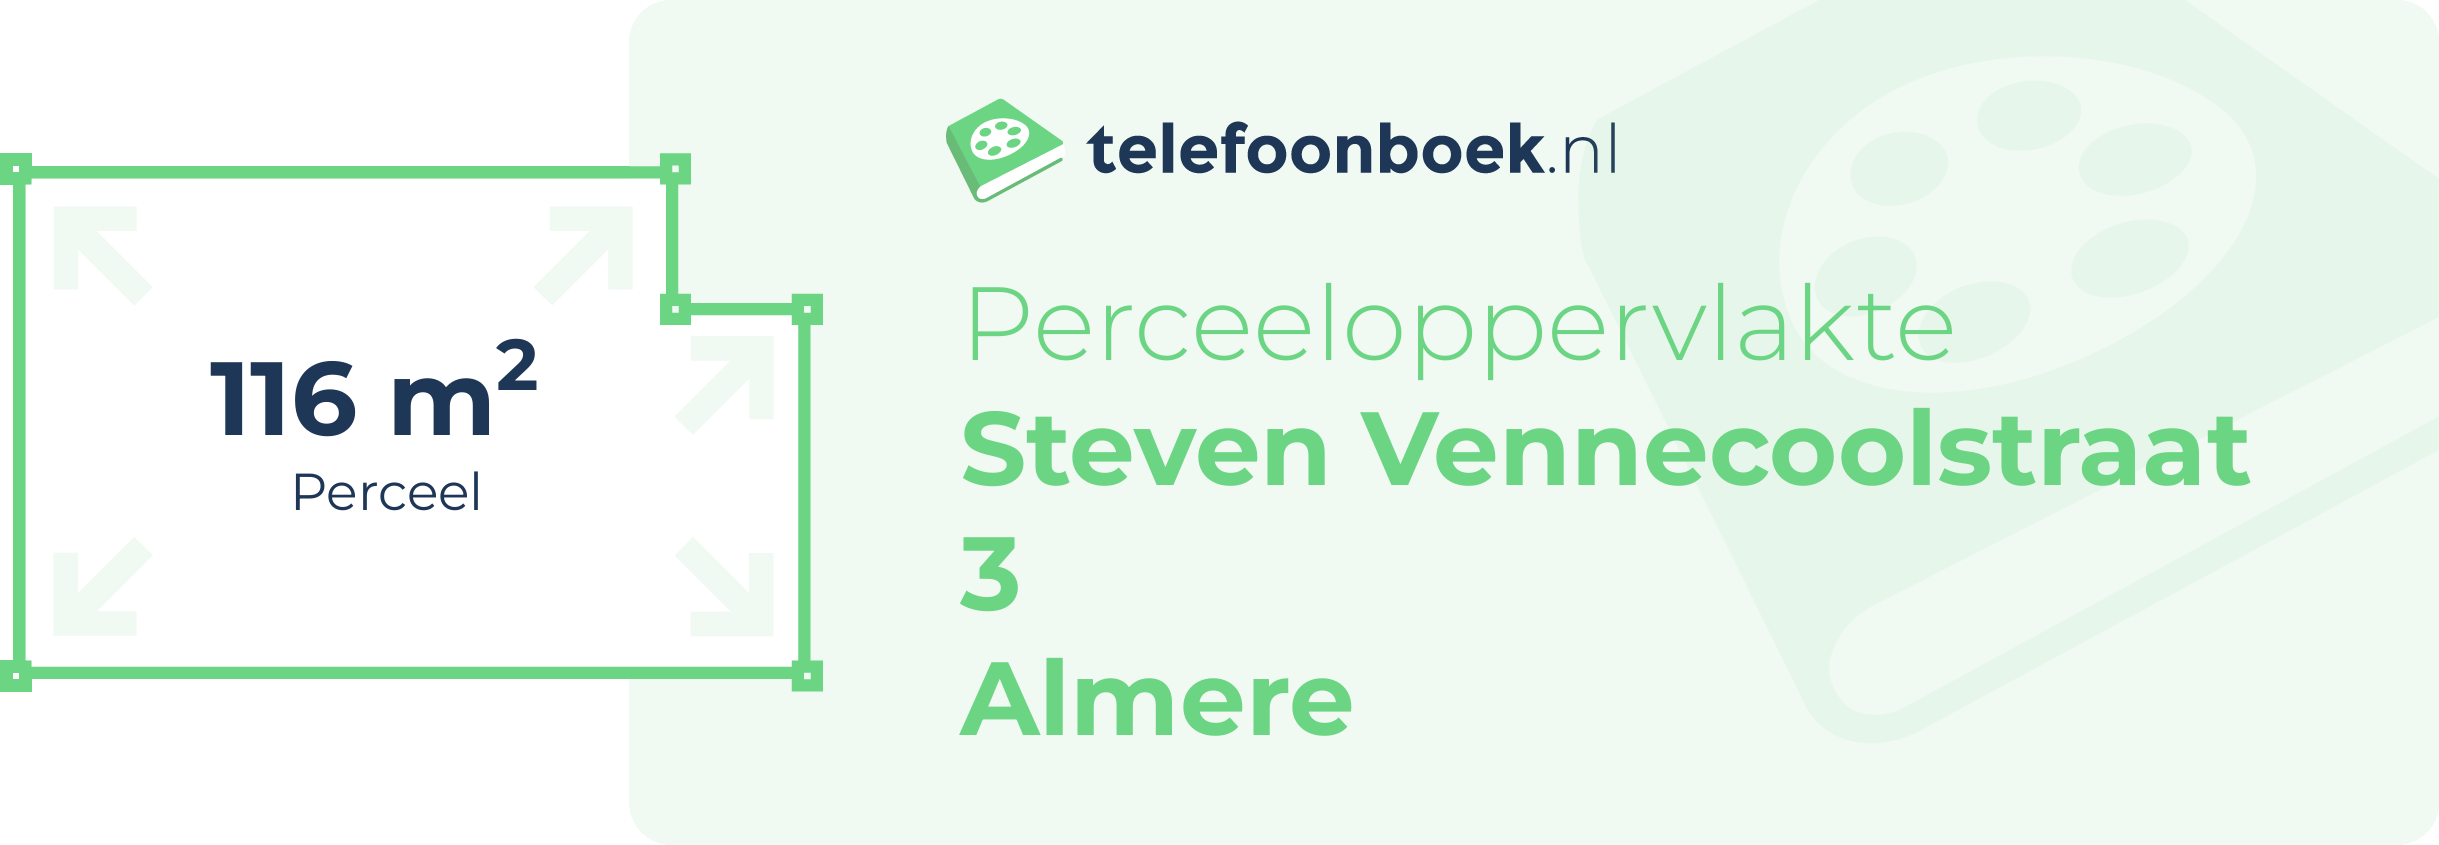 Perceeloppervlakte Steven Vennecoolstraat 3 Almere